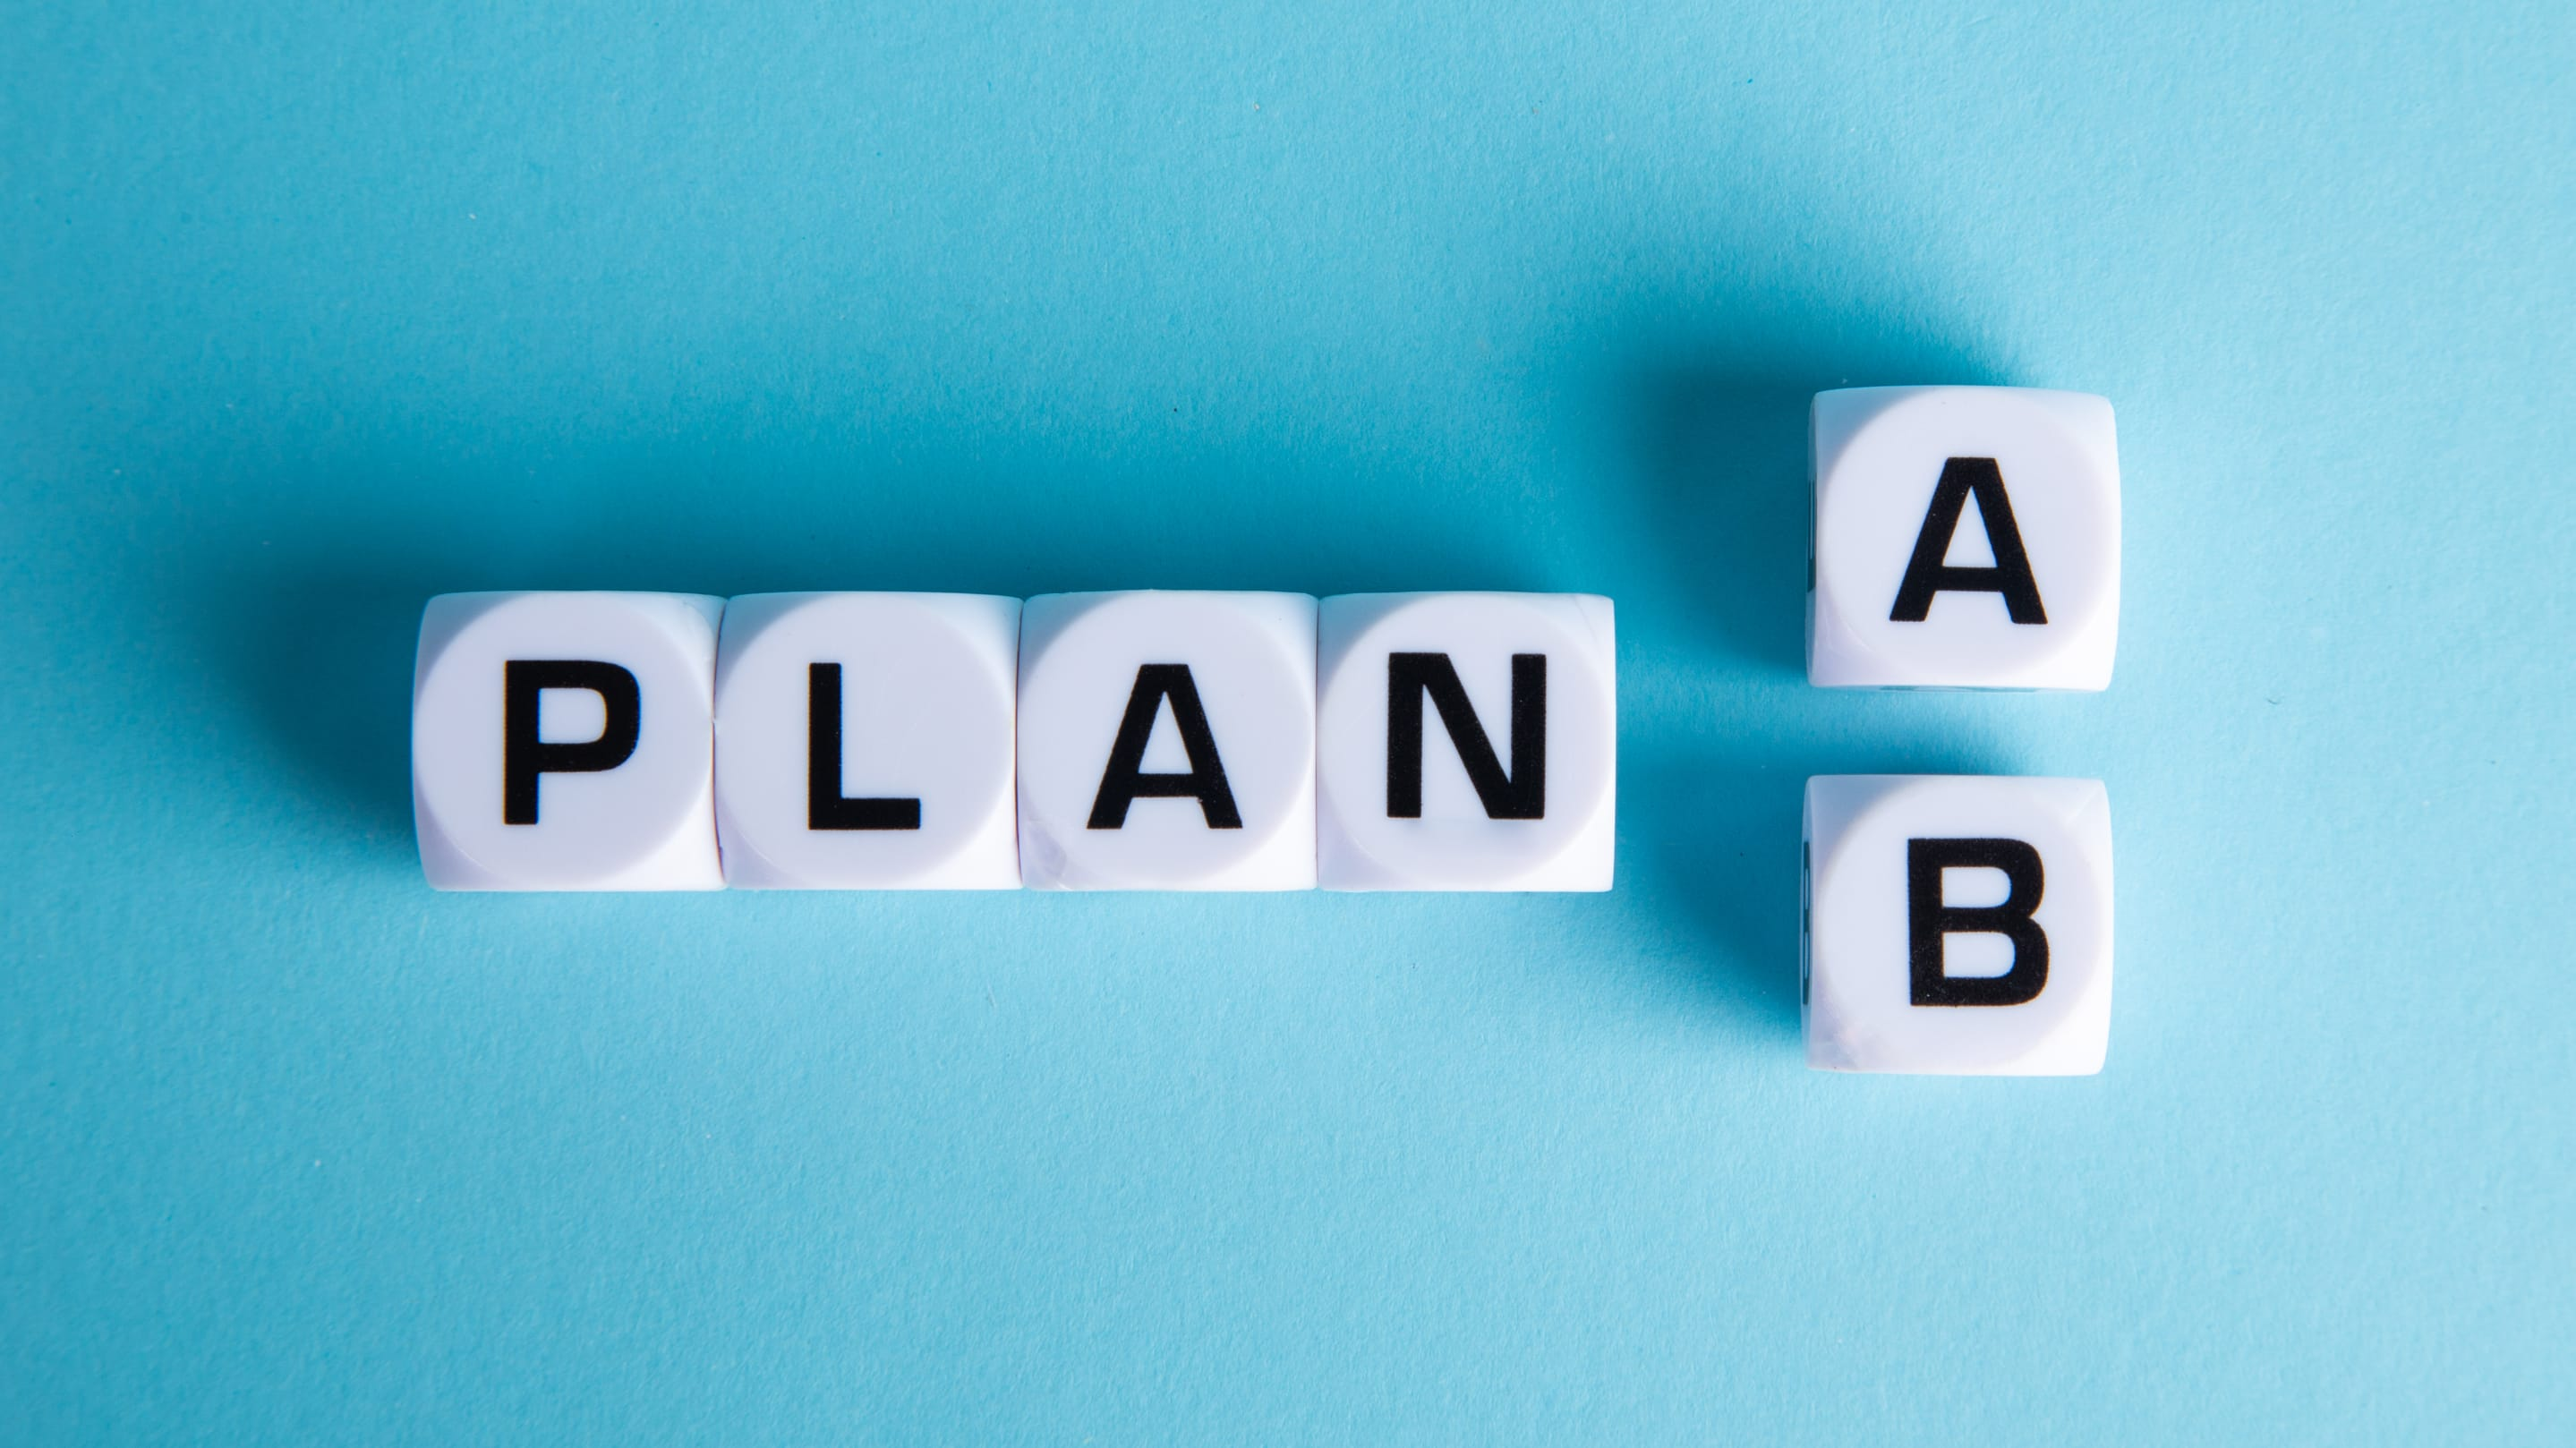 avoid business failure - plan in advance